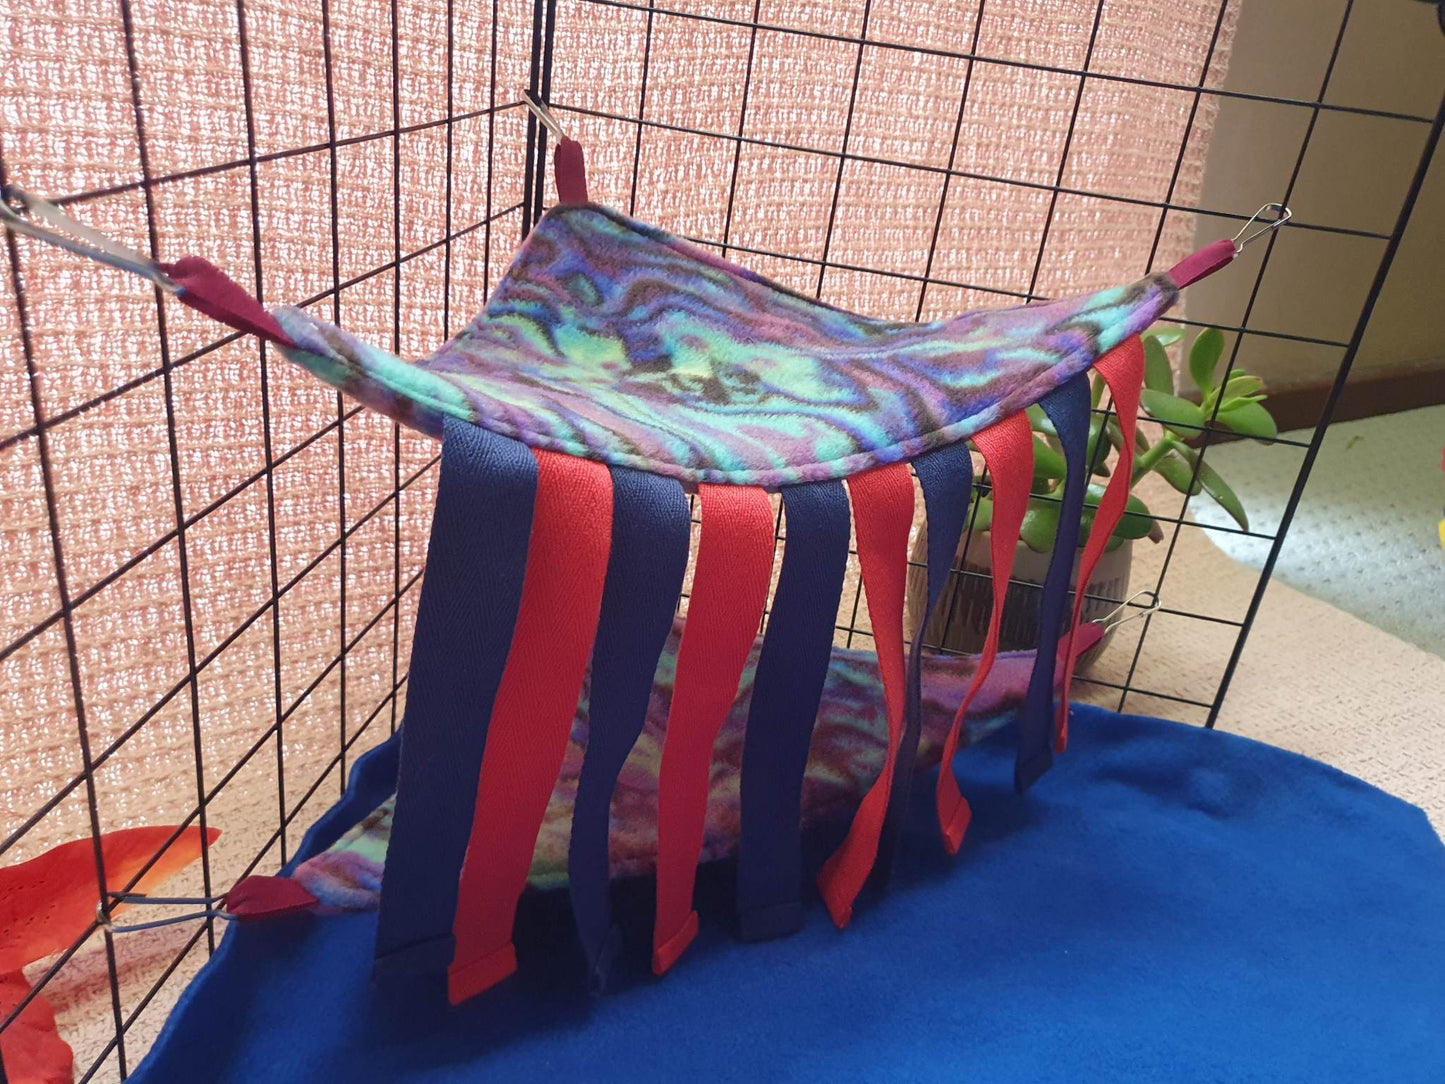 sugar glider hammock set